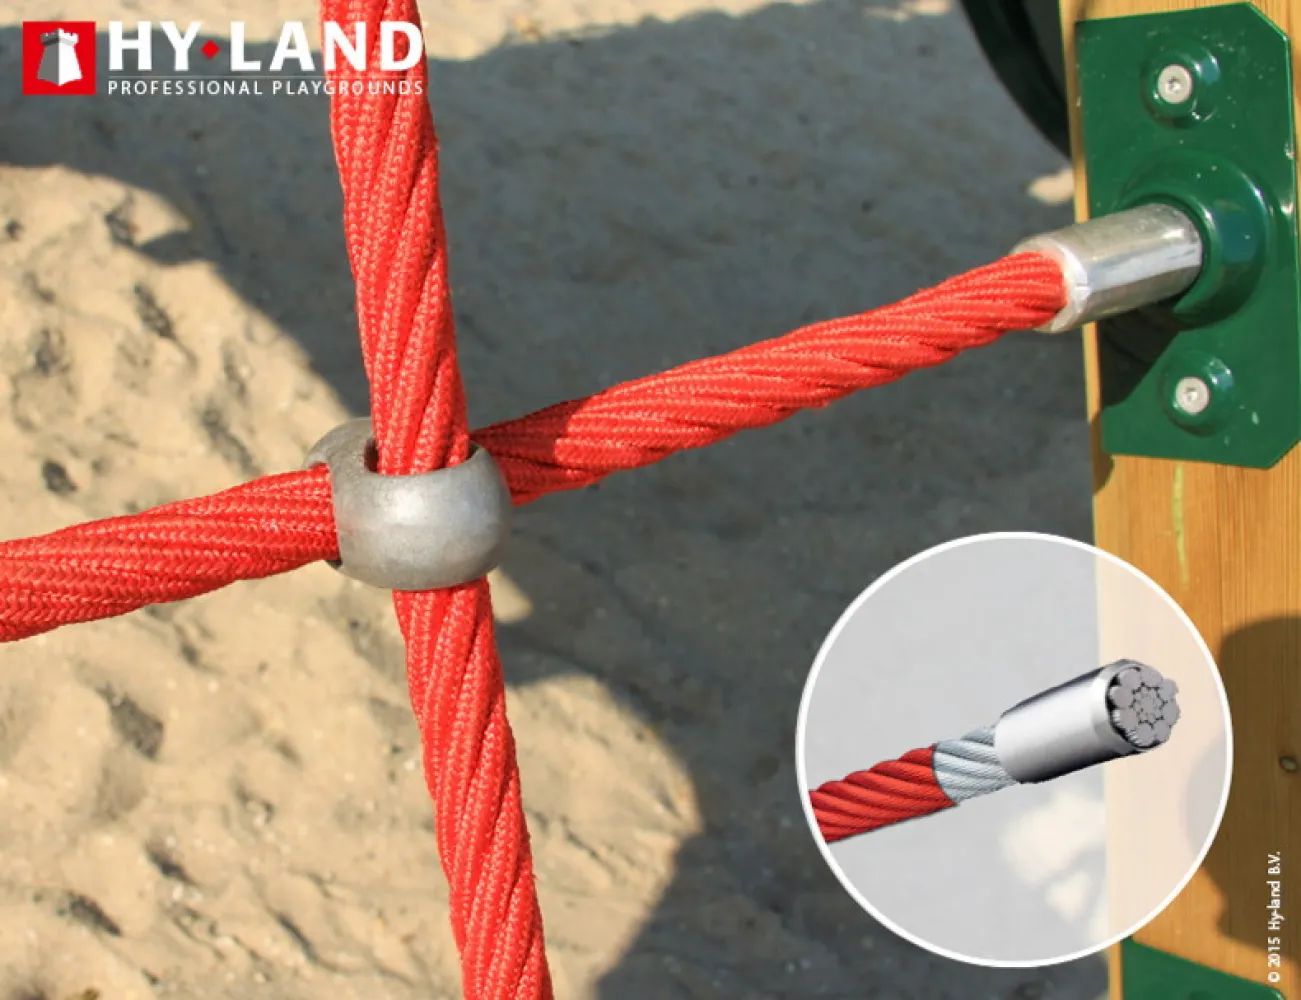 sandy|detailabbildung-kletternetz-kletterturm-hyland.jpg